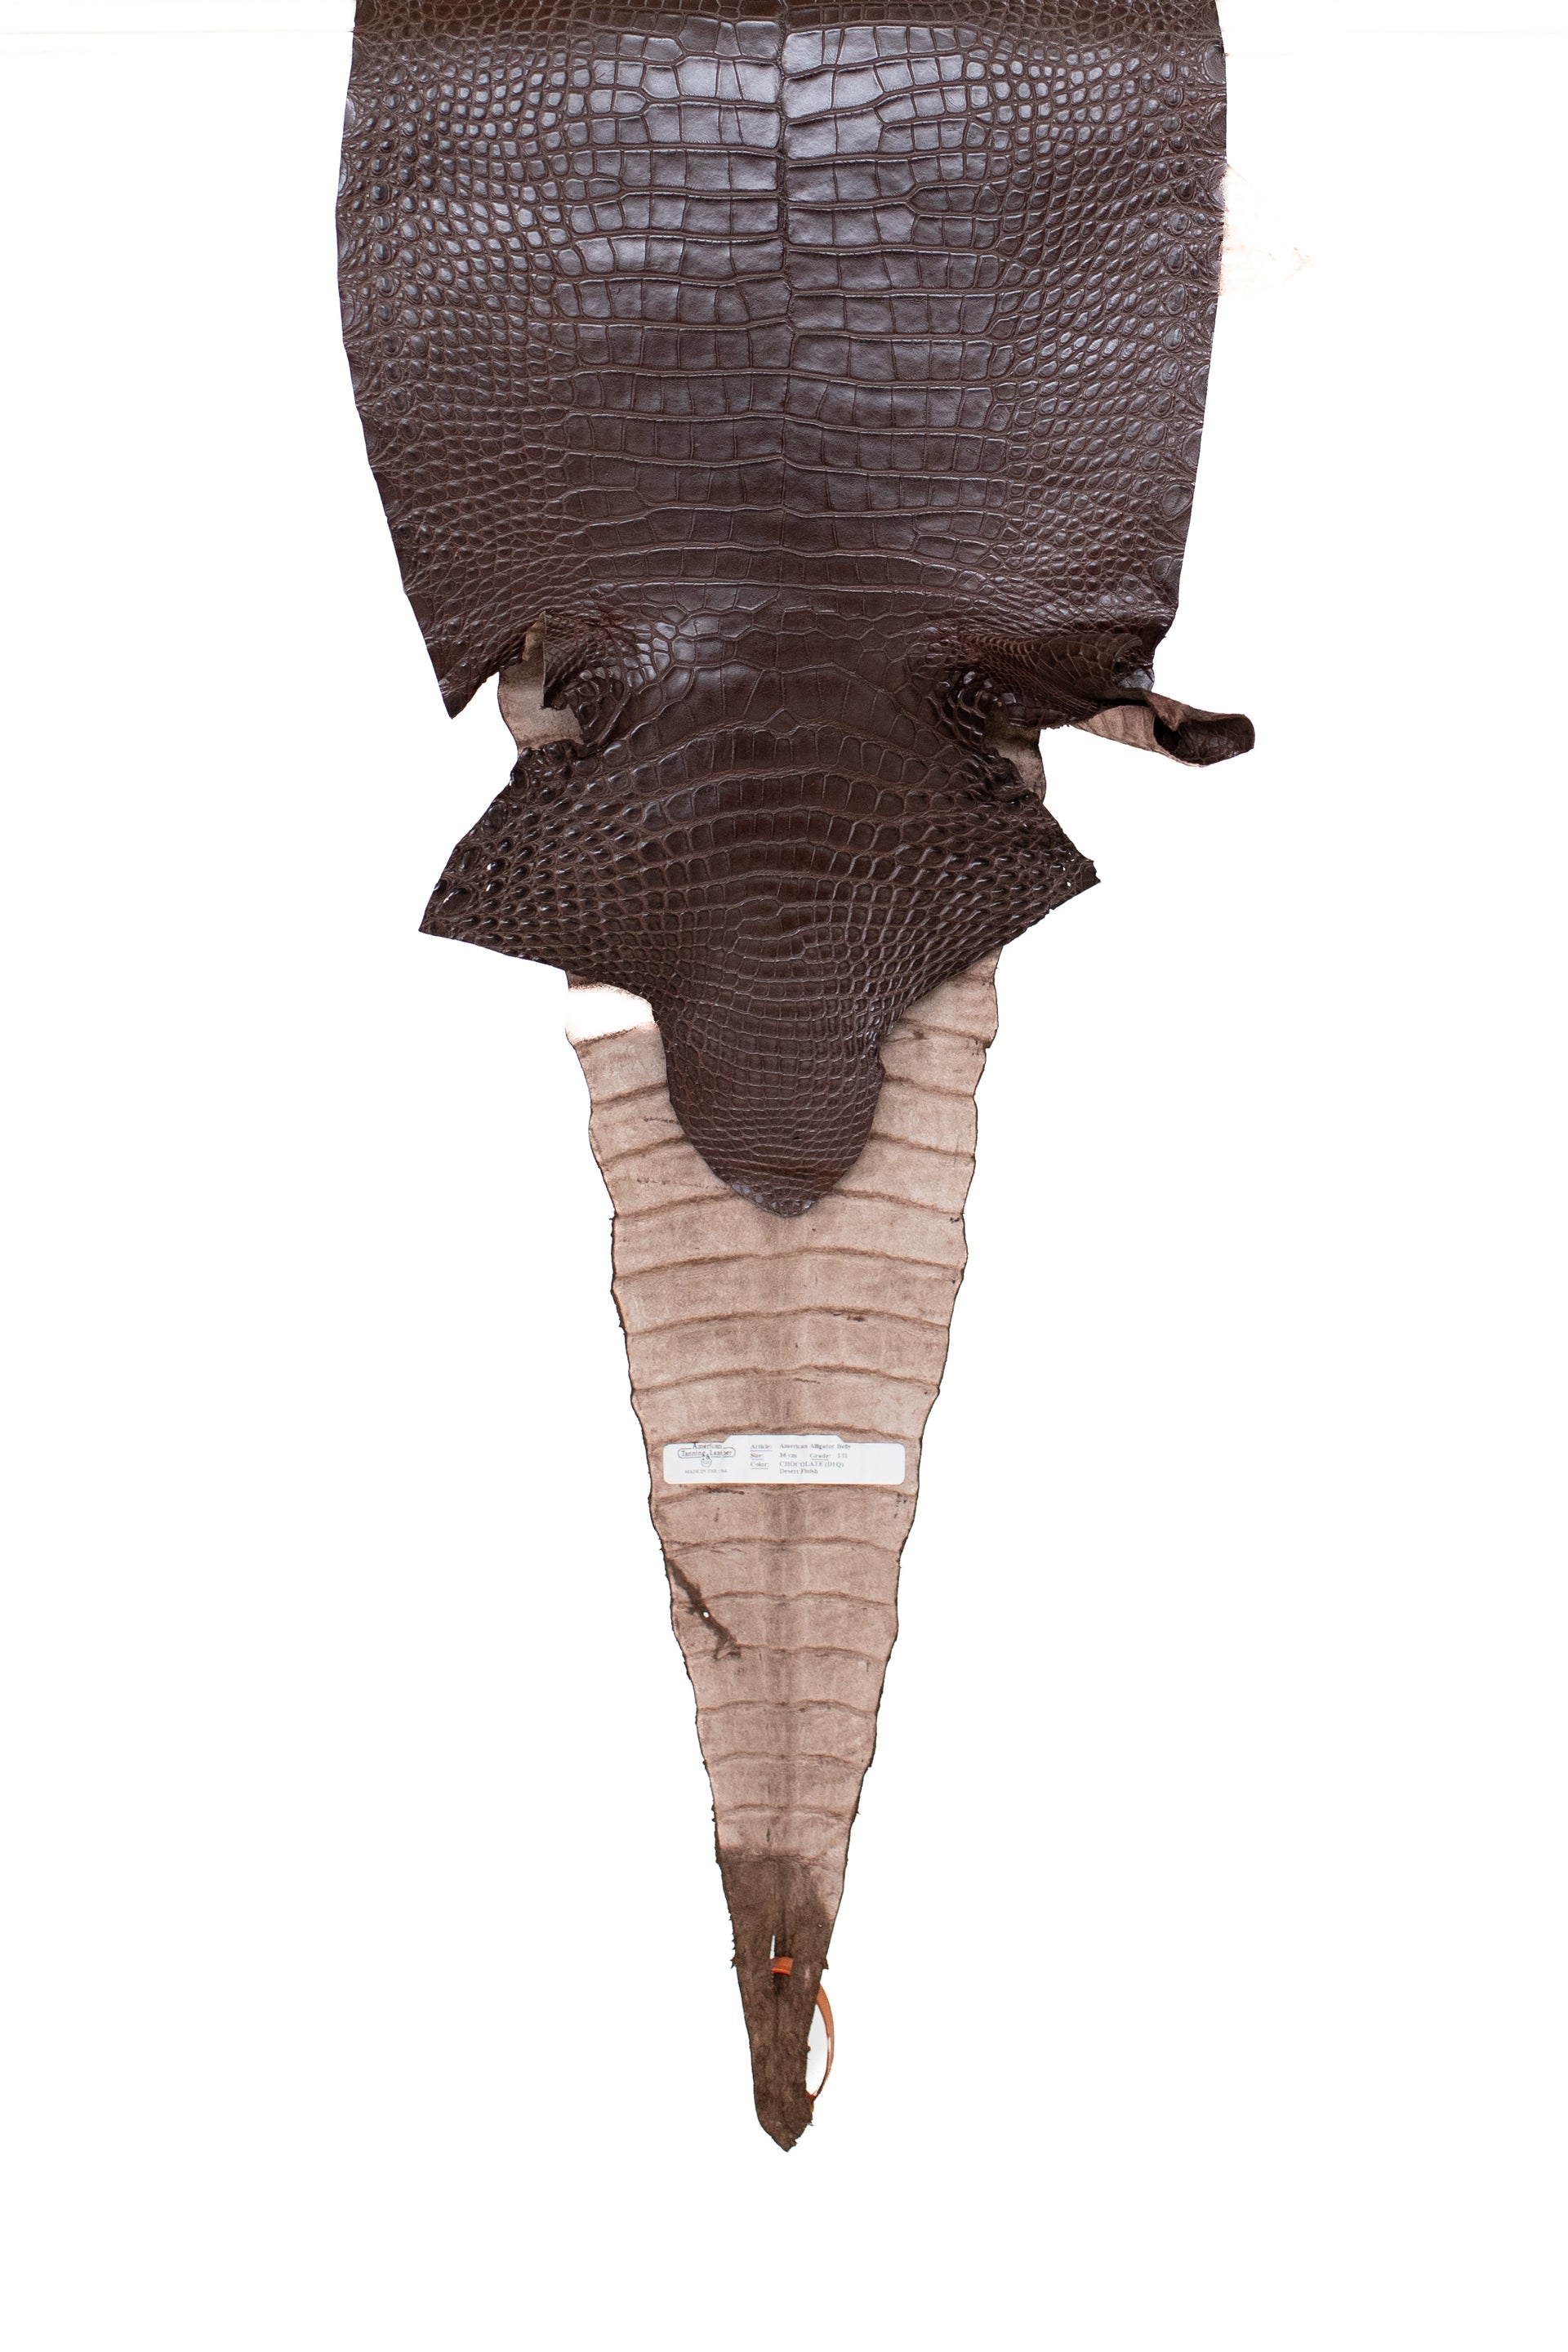 36 cm Grade 1/2 Chocolate Matte Farm Raised American Alligator Leather - Tag: FL17-0035971